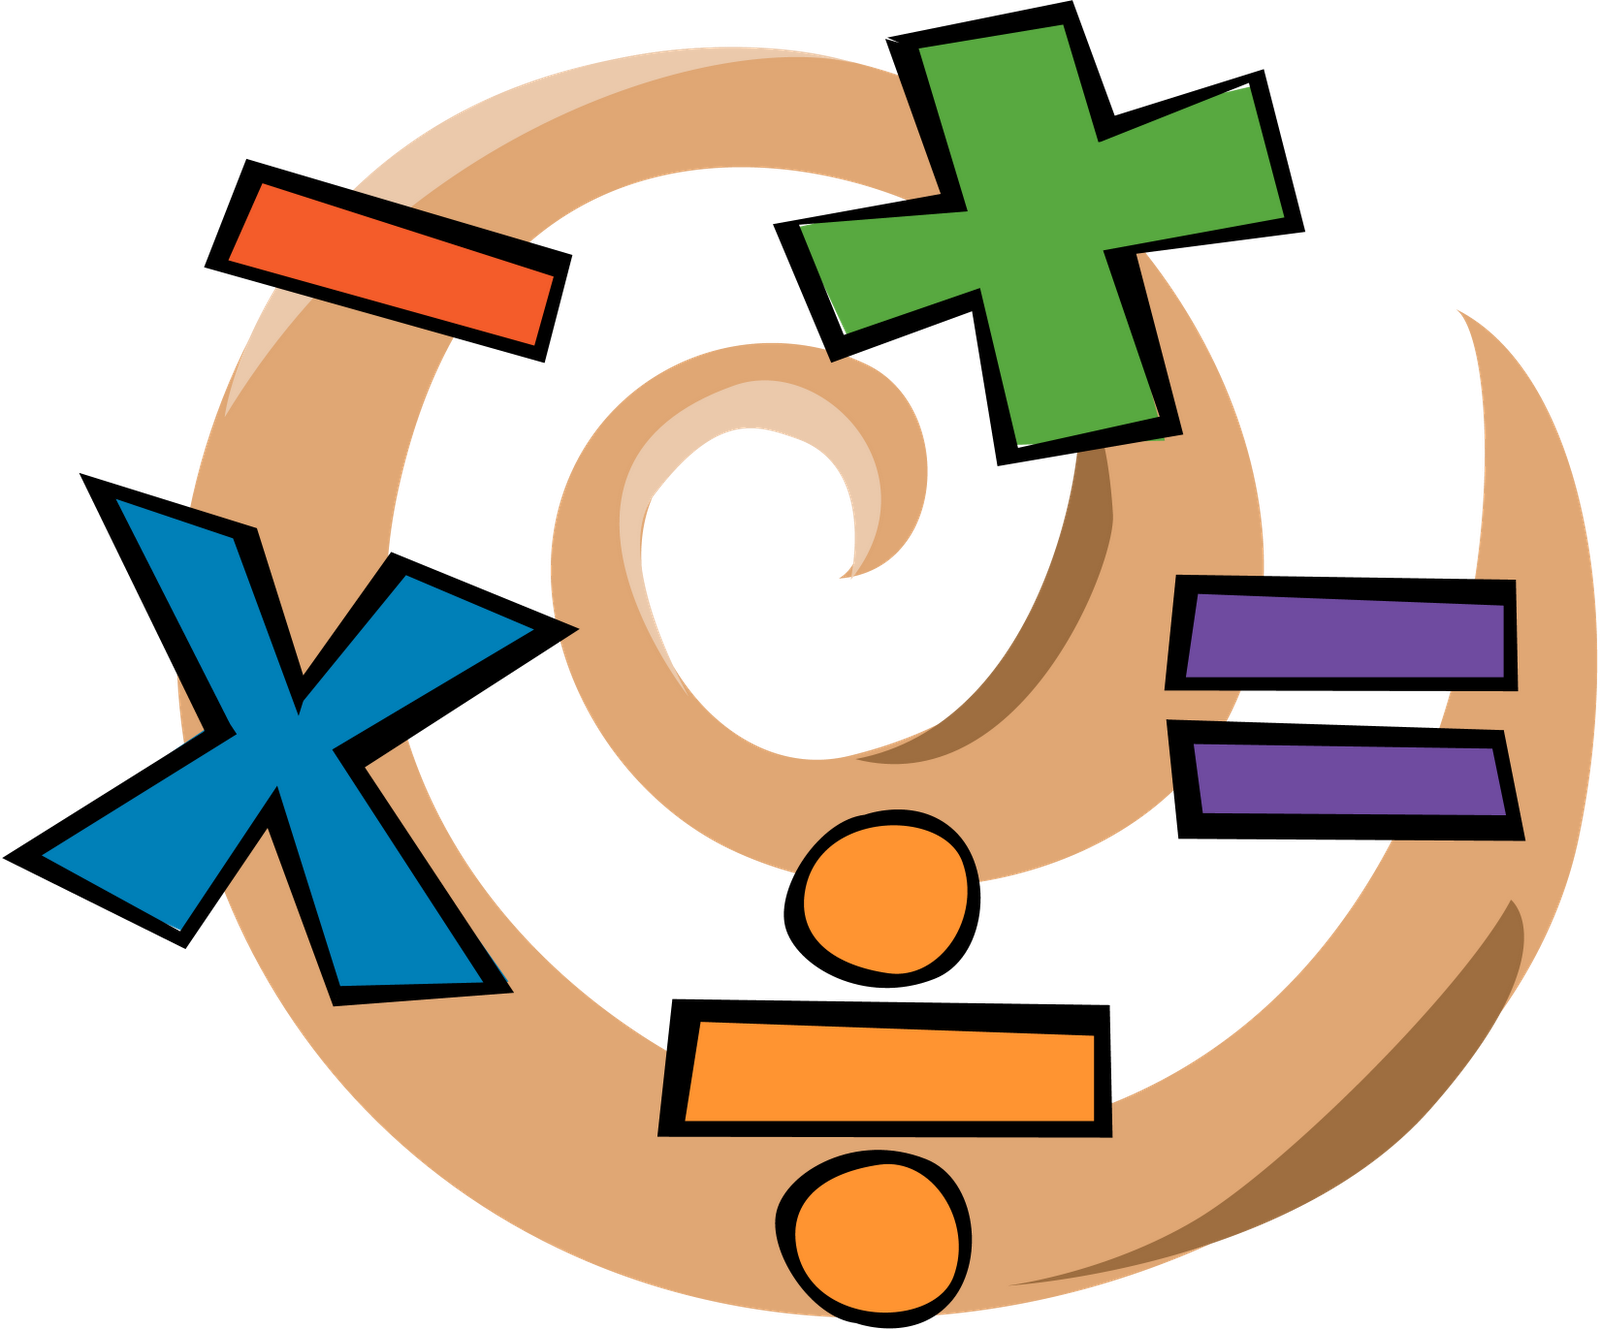 A Colorful Math Symbols On A Black Background